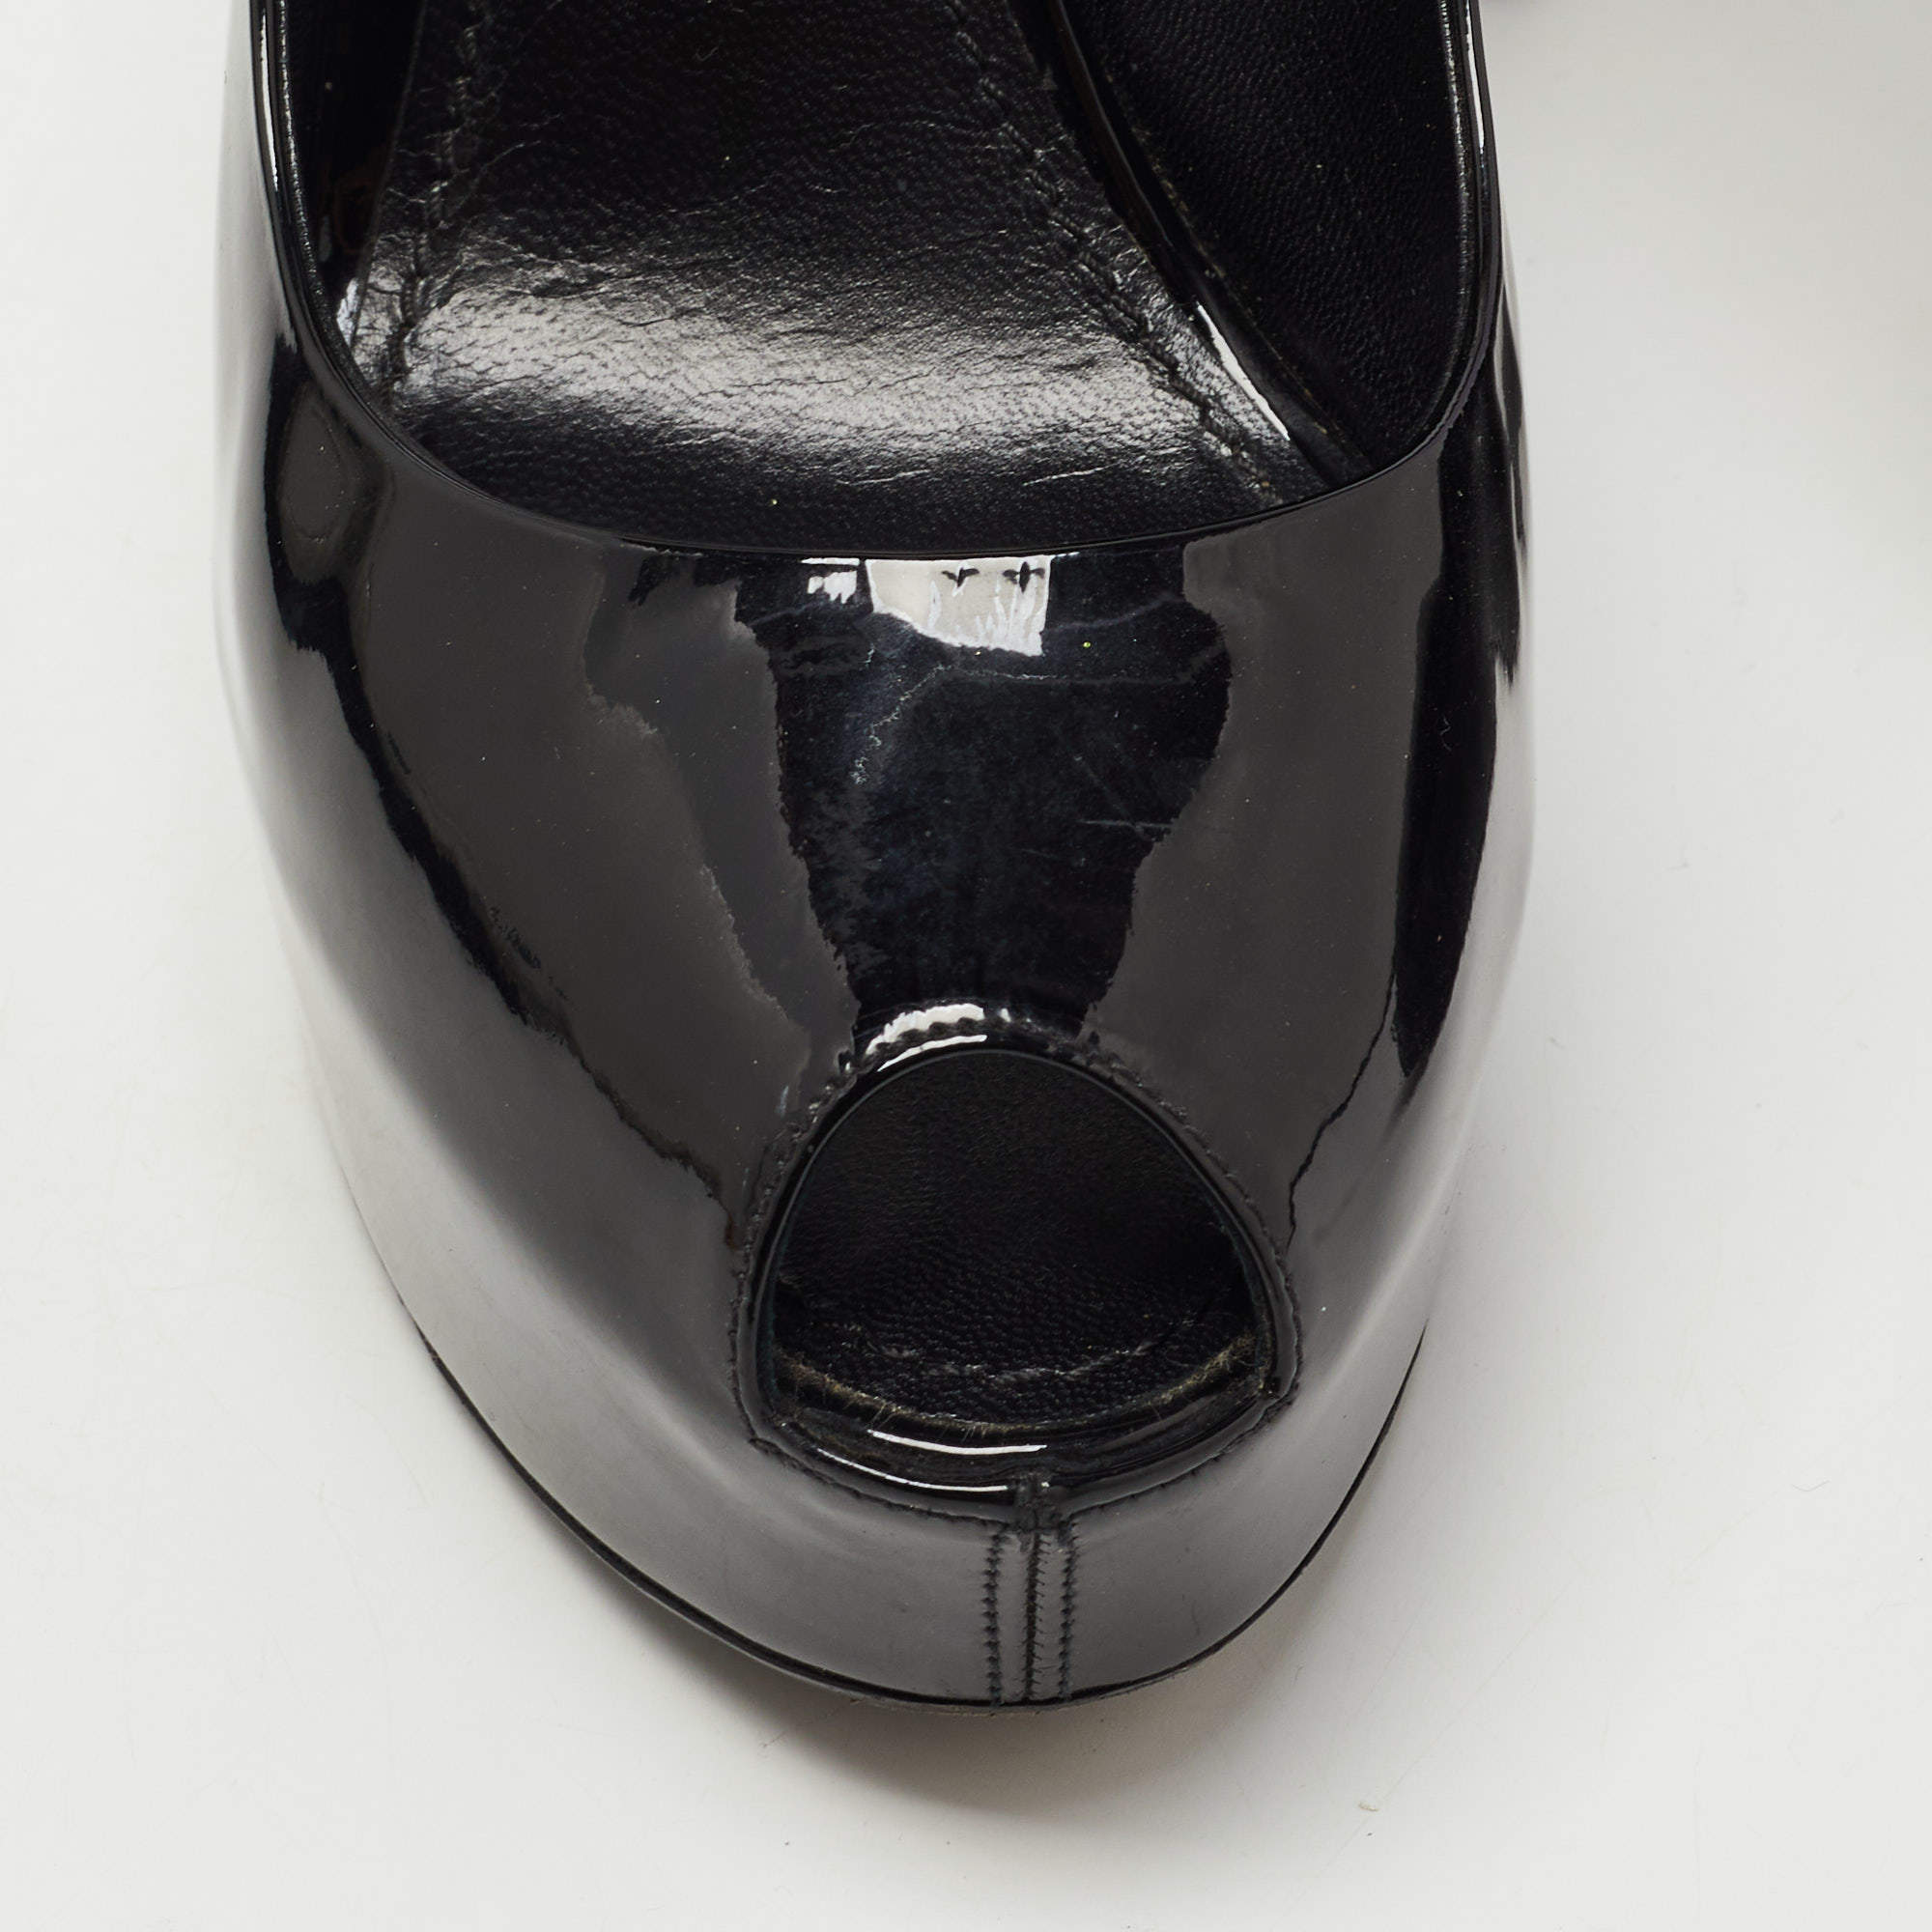 Louis Vuitton Black Patent Leather Lily Open Side Pumps Size 7.5/38 -  Yoogi's Closet